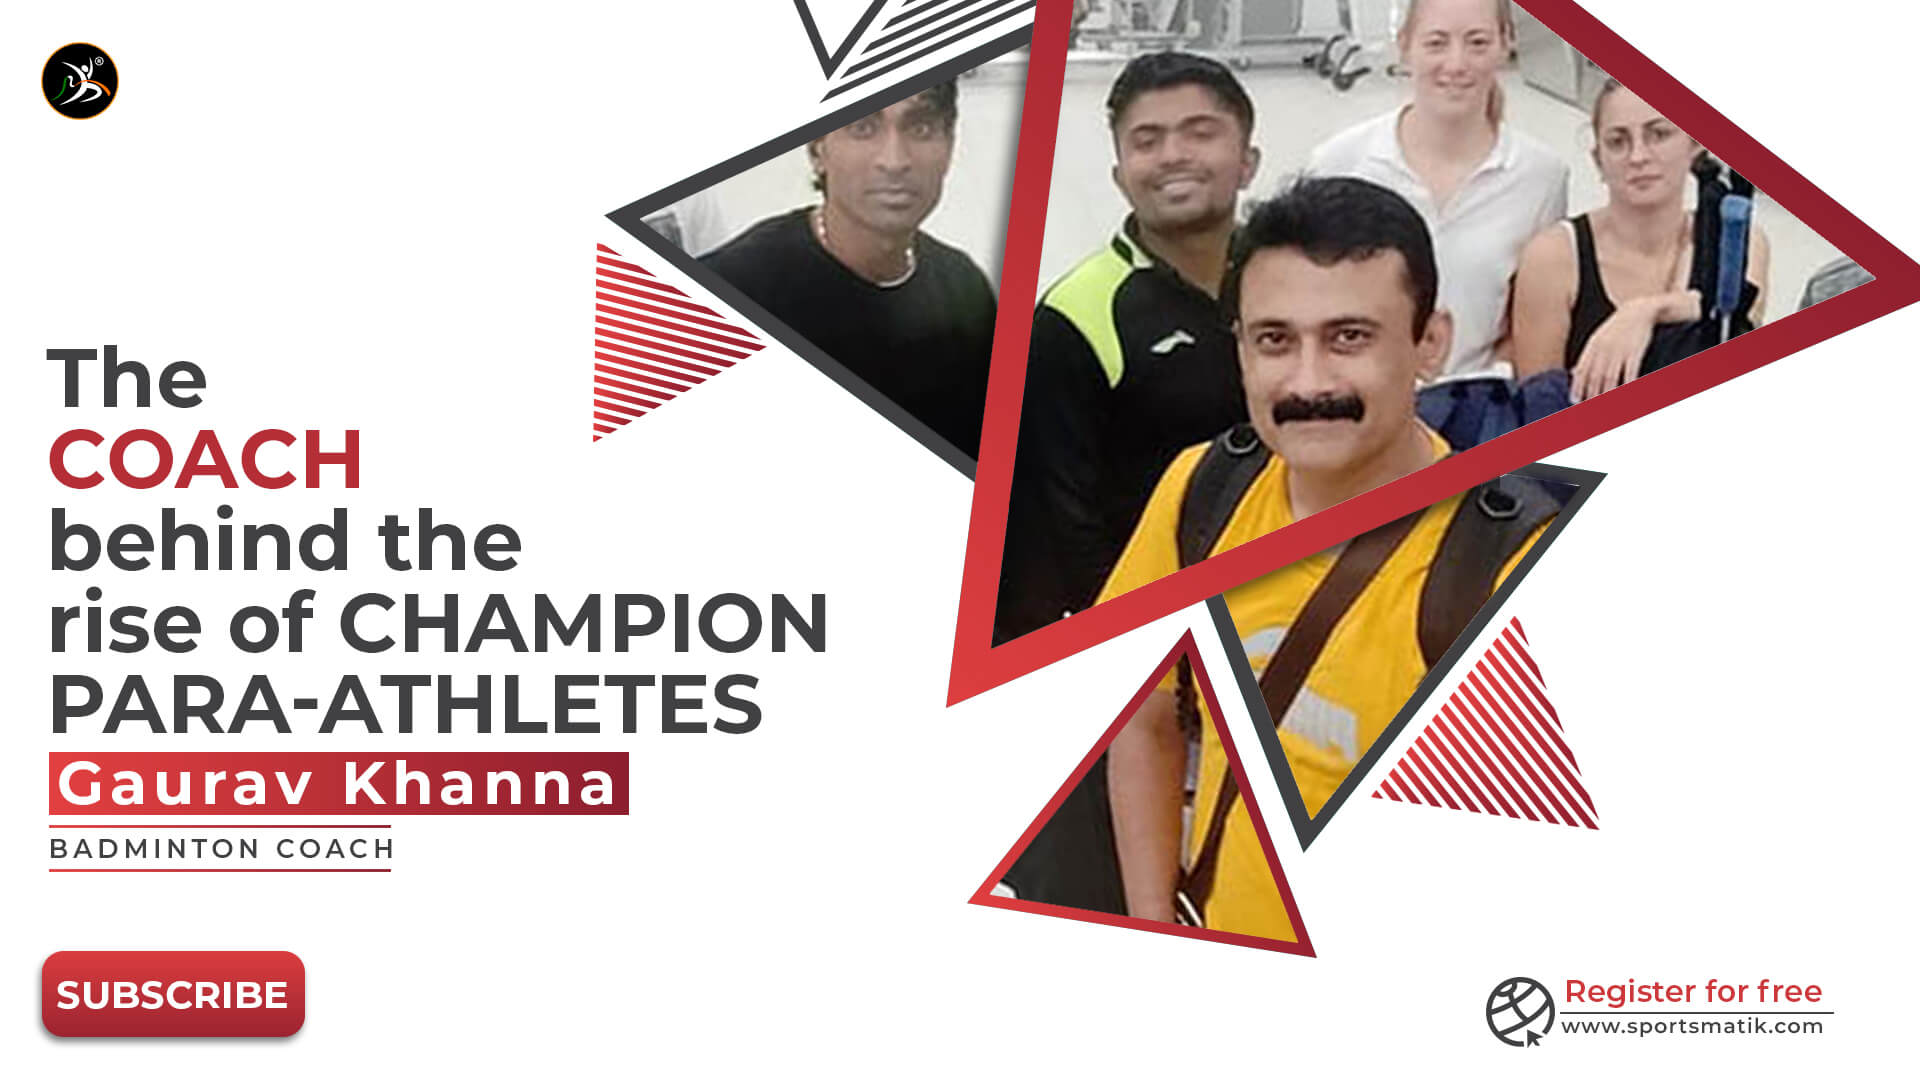 Gaurav Khanna: The Coach behind the rise of Champion Para-Athletes